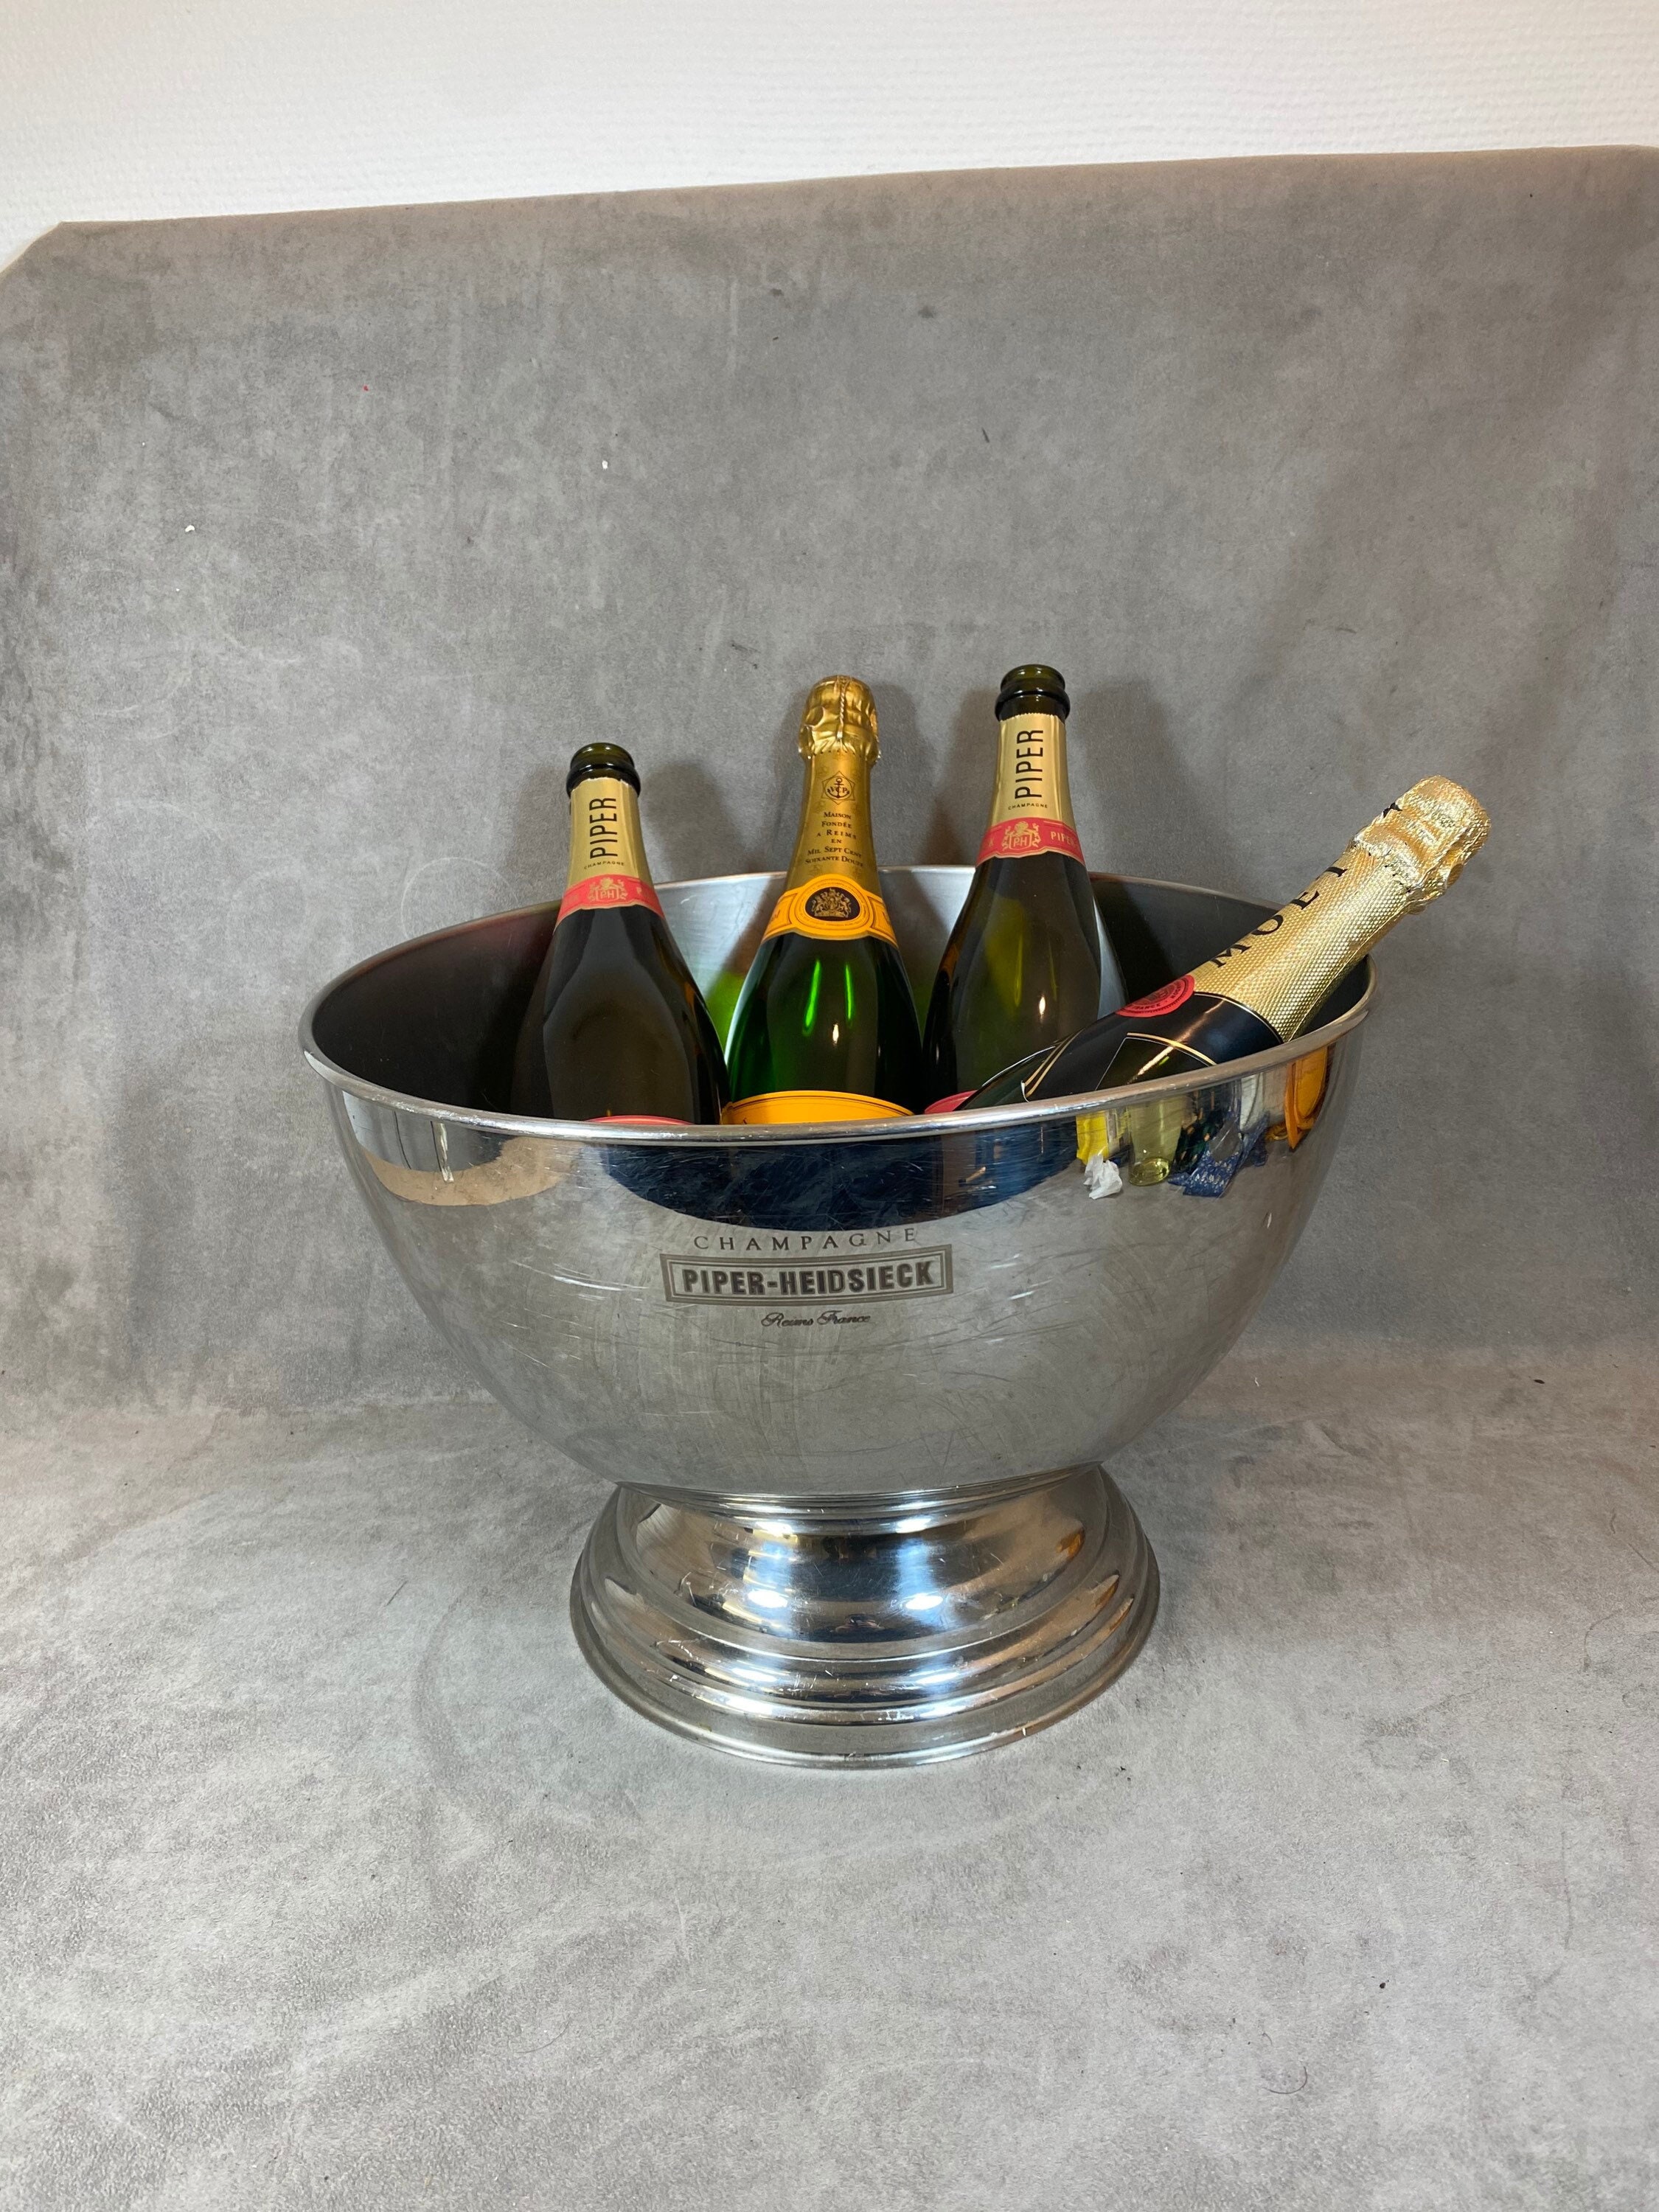 Cadeau personnalisé champagne - Piper Heidsieck